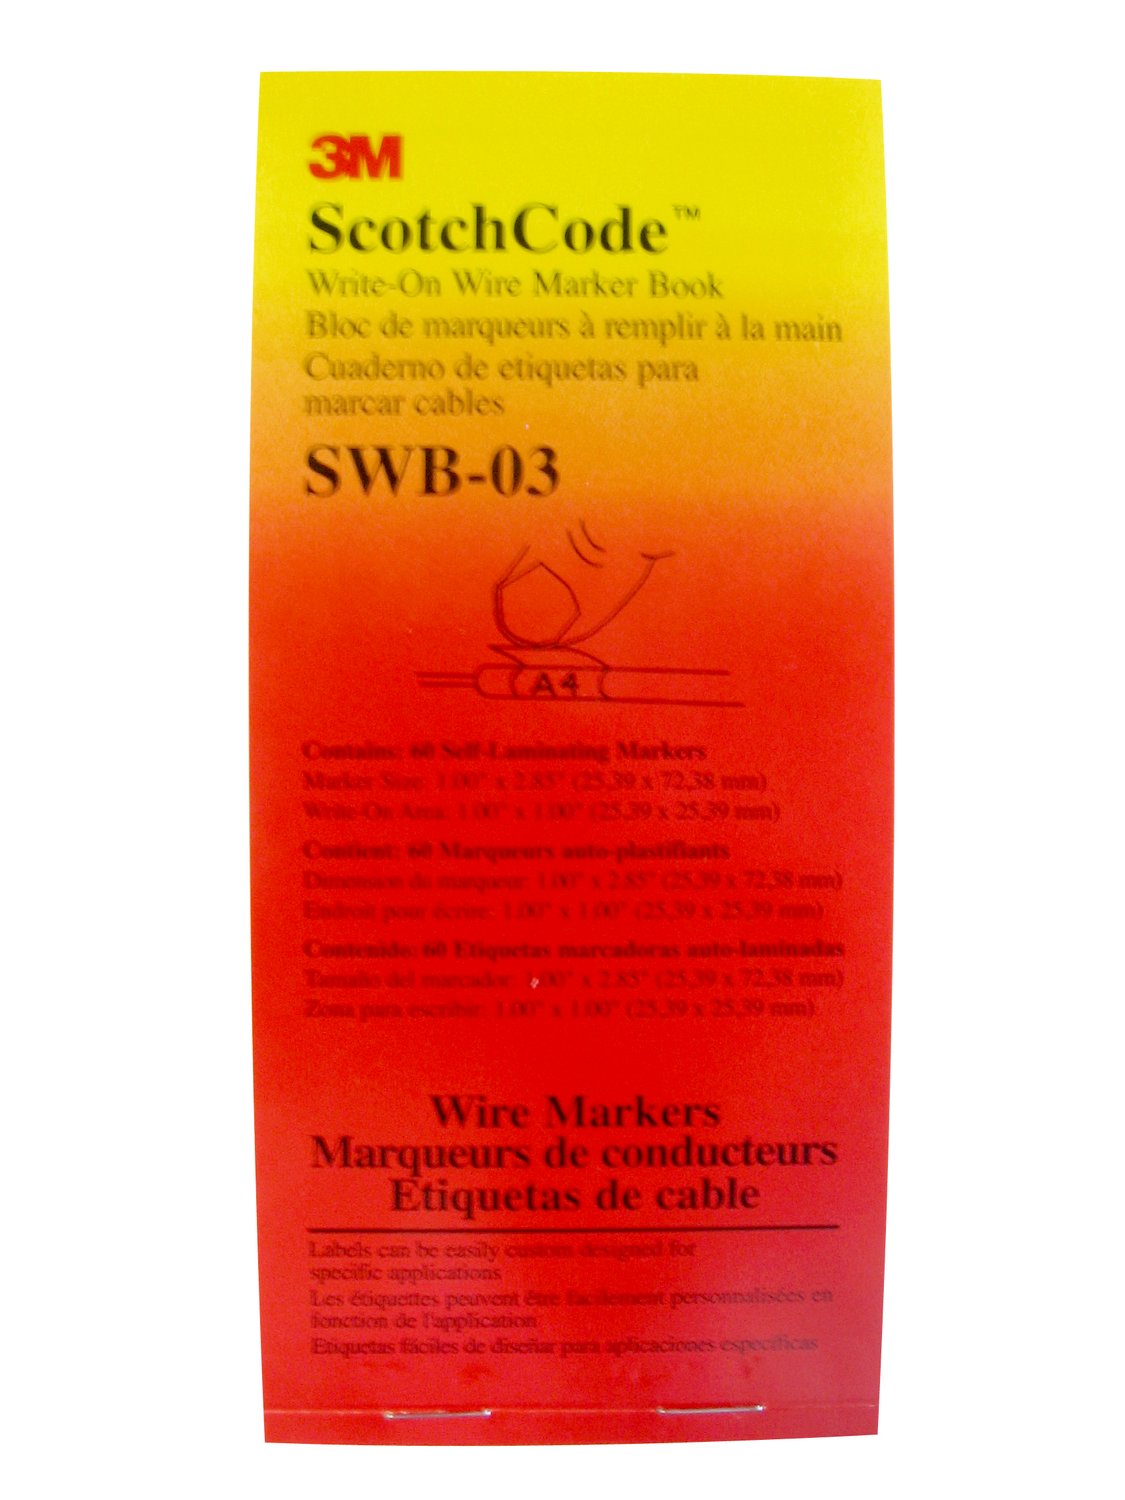 7000058802 - 3M ScotchCode Write-On Wire Marker Book SWB-03, 1 in x 2.85 in, 5/Case